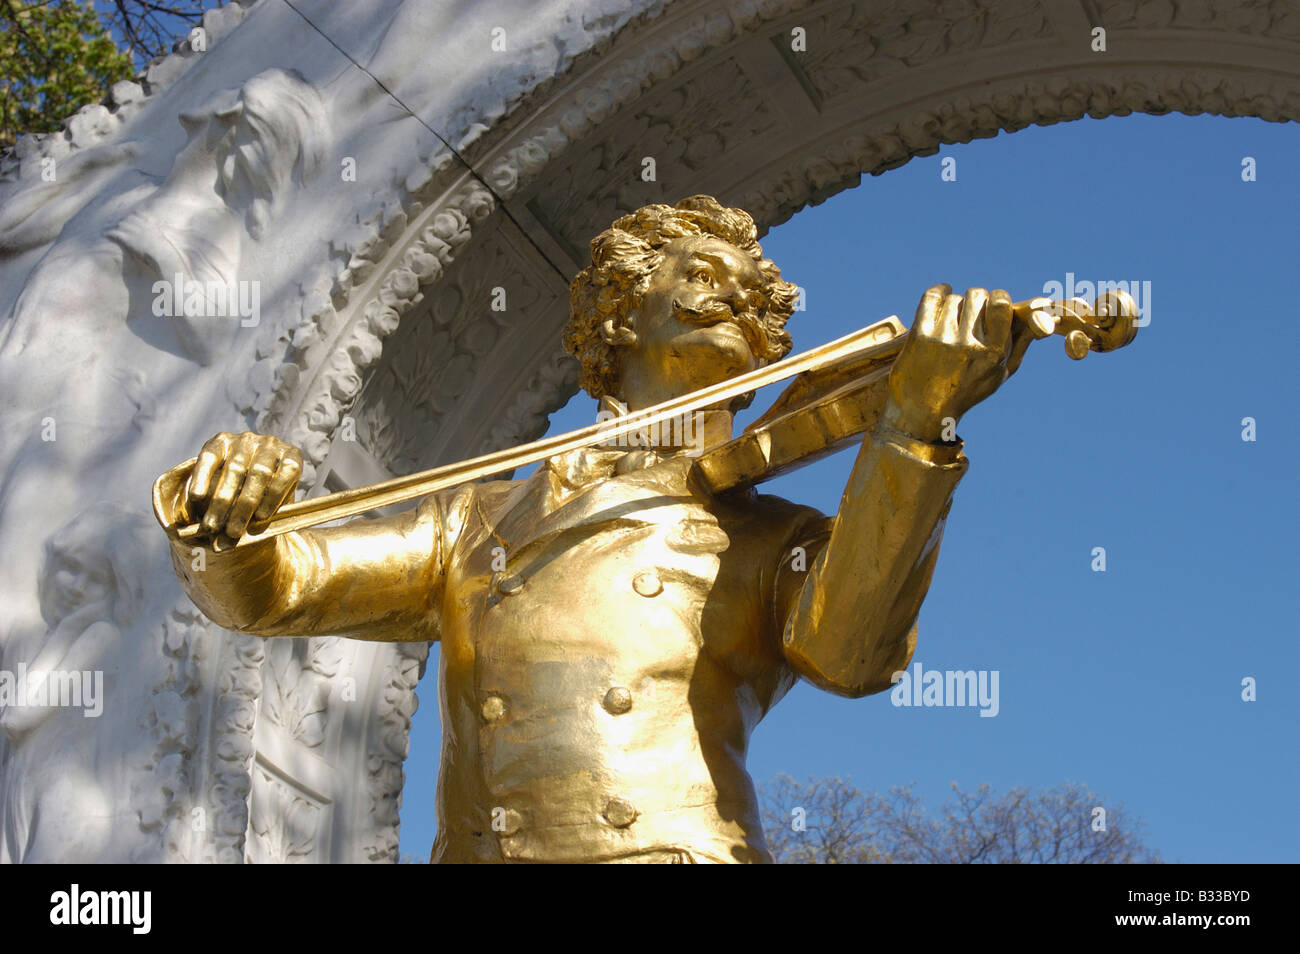 Johann Strauss monument in spring Stock Photo